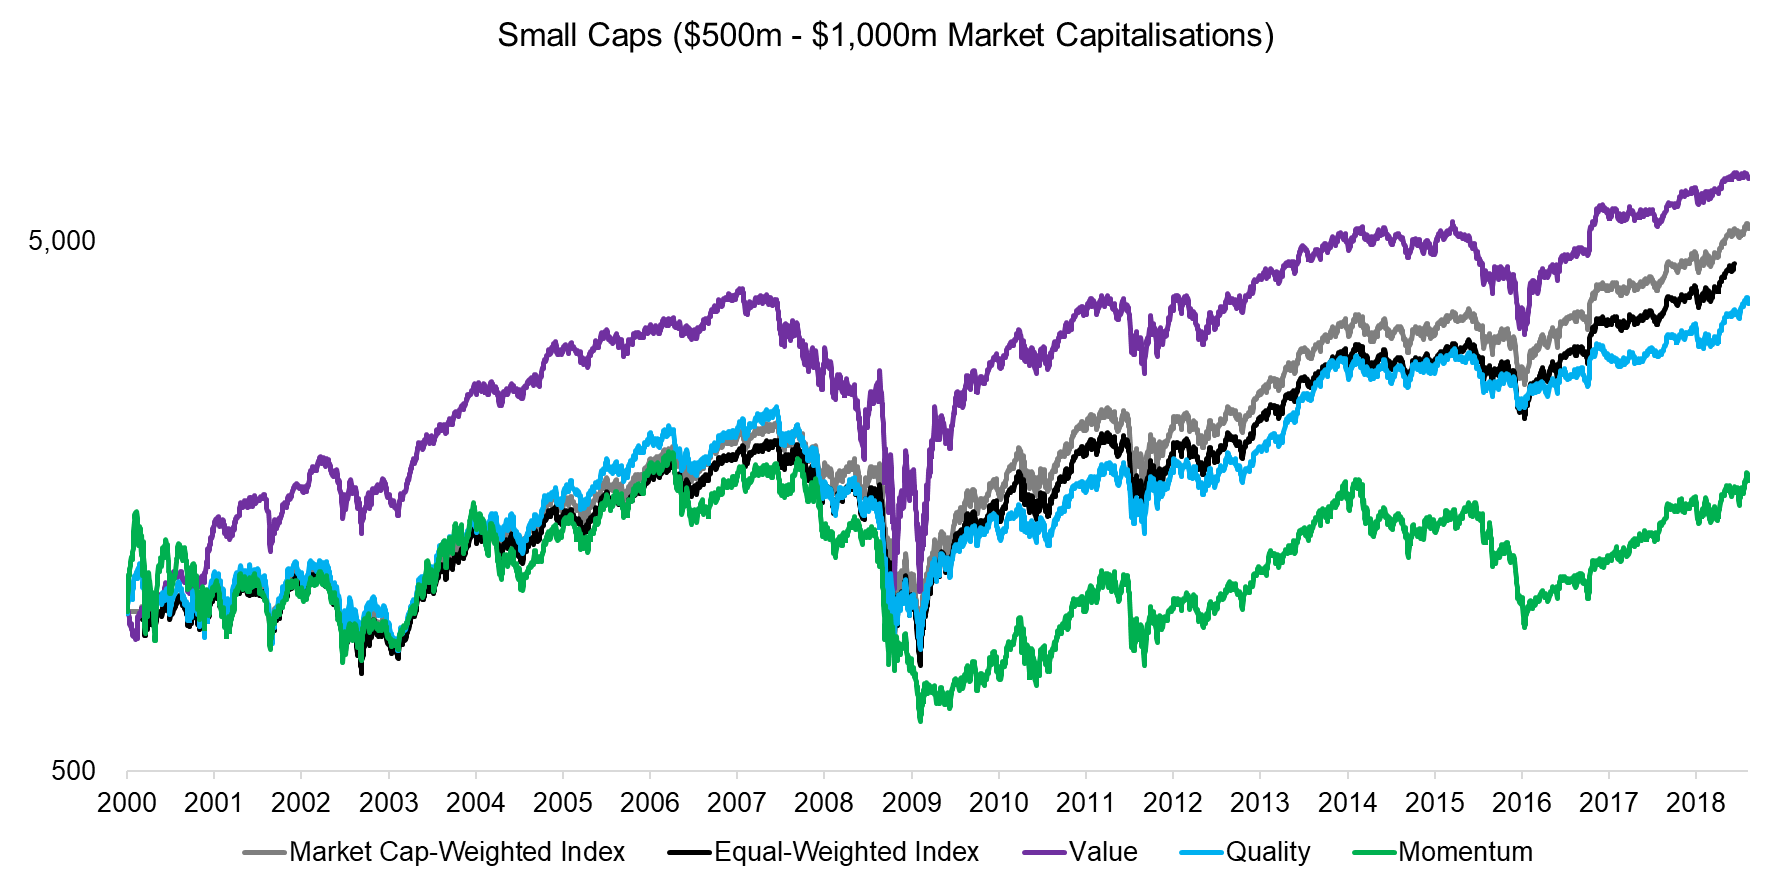 Small Caps ($500m - $1,000m Market Capitalisations)